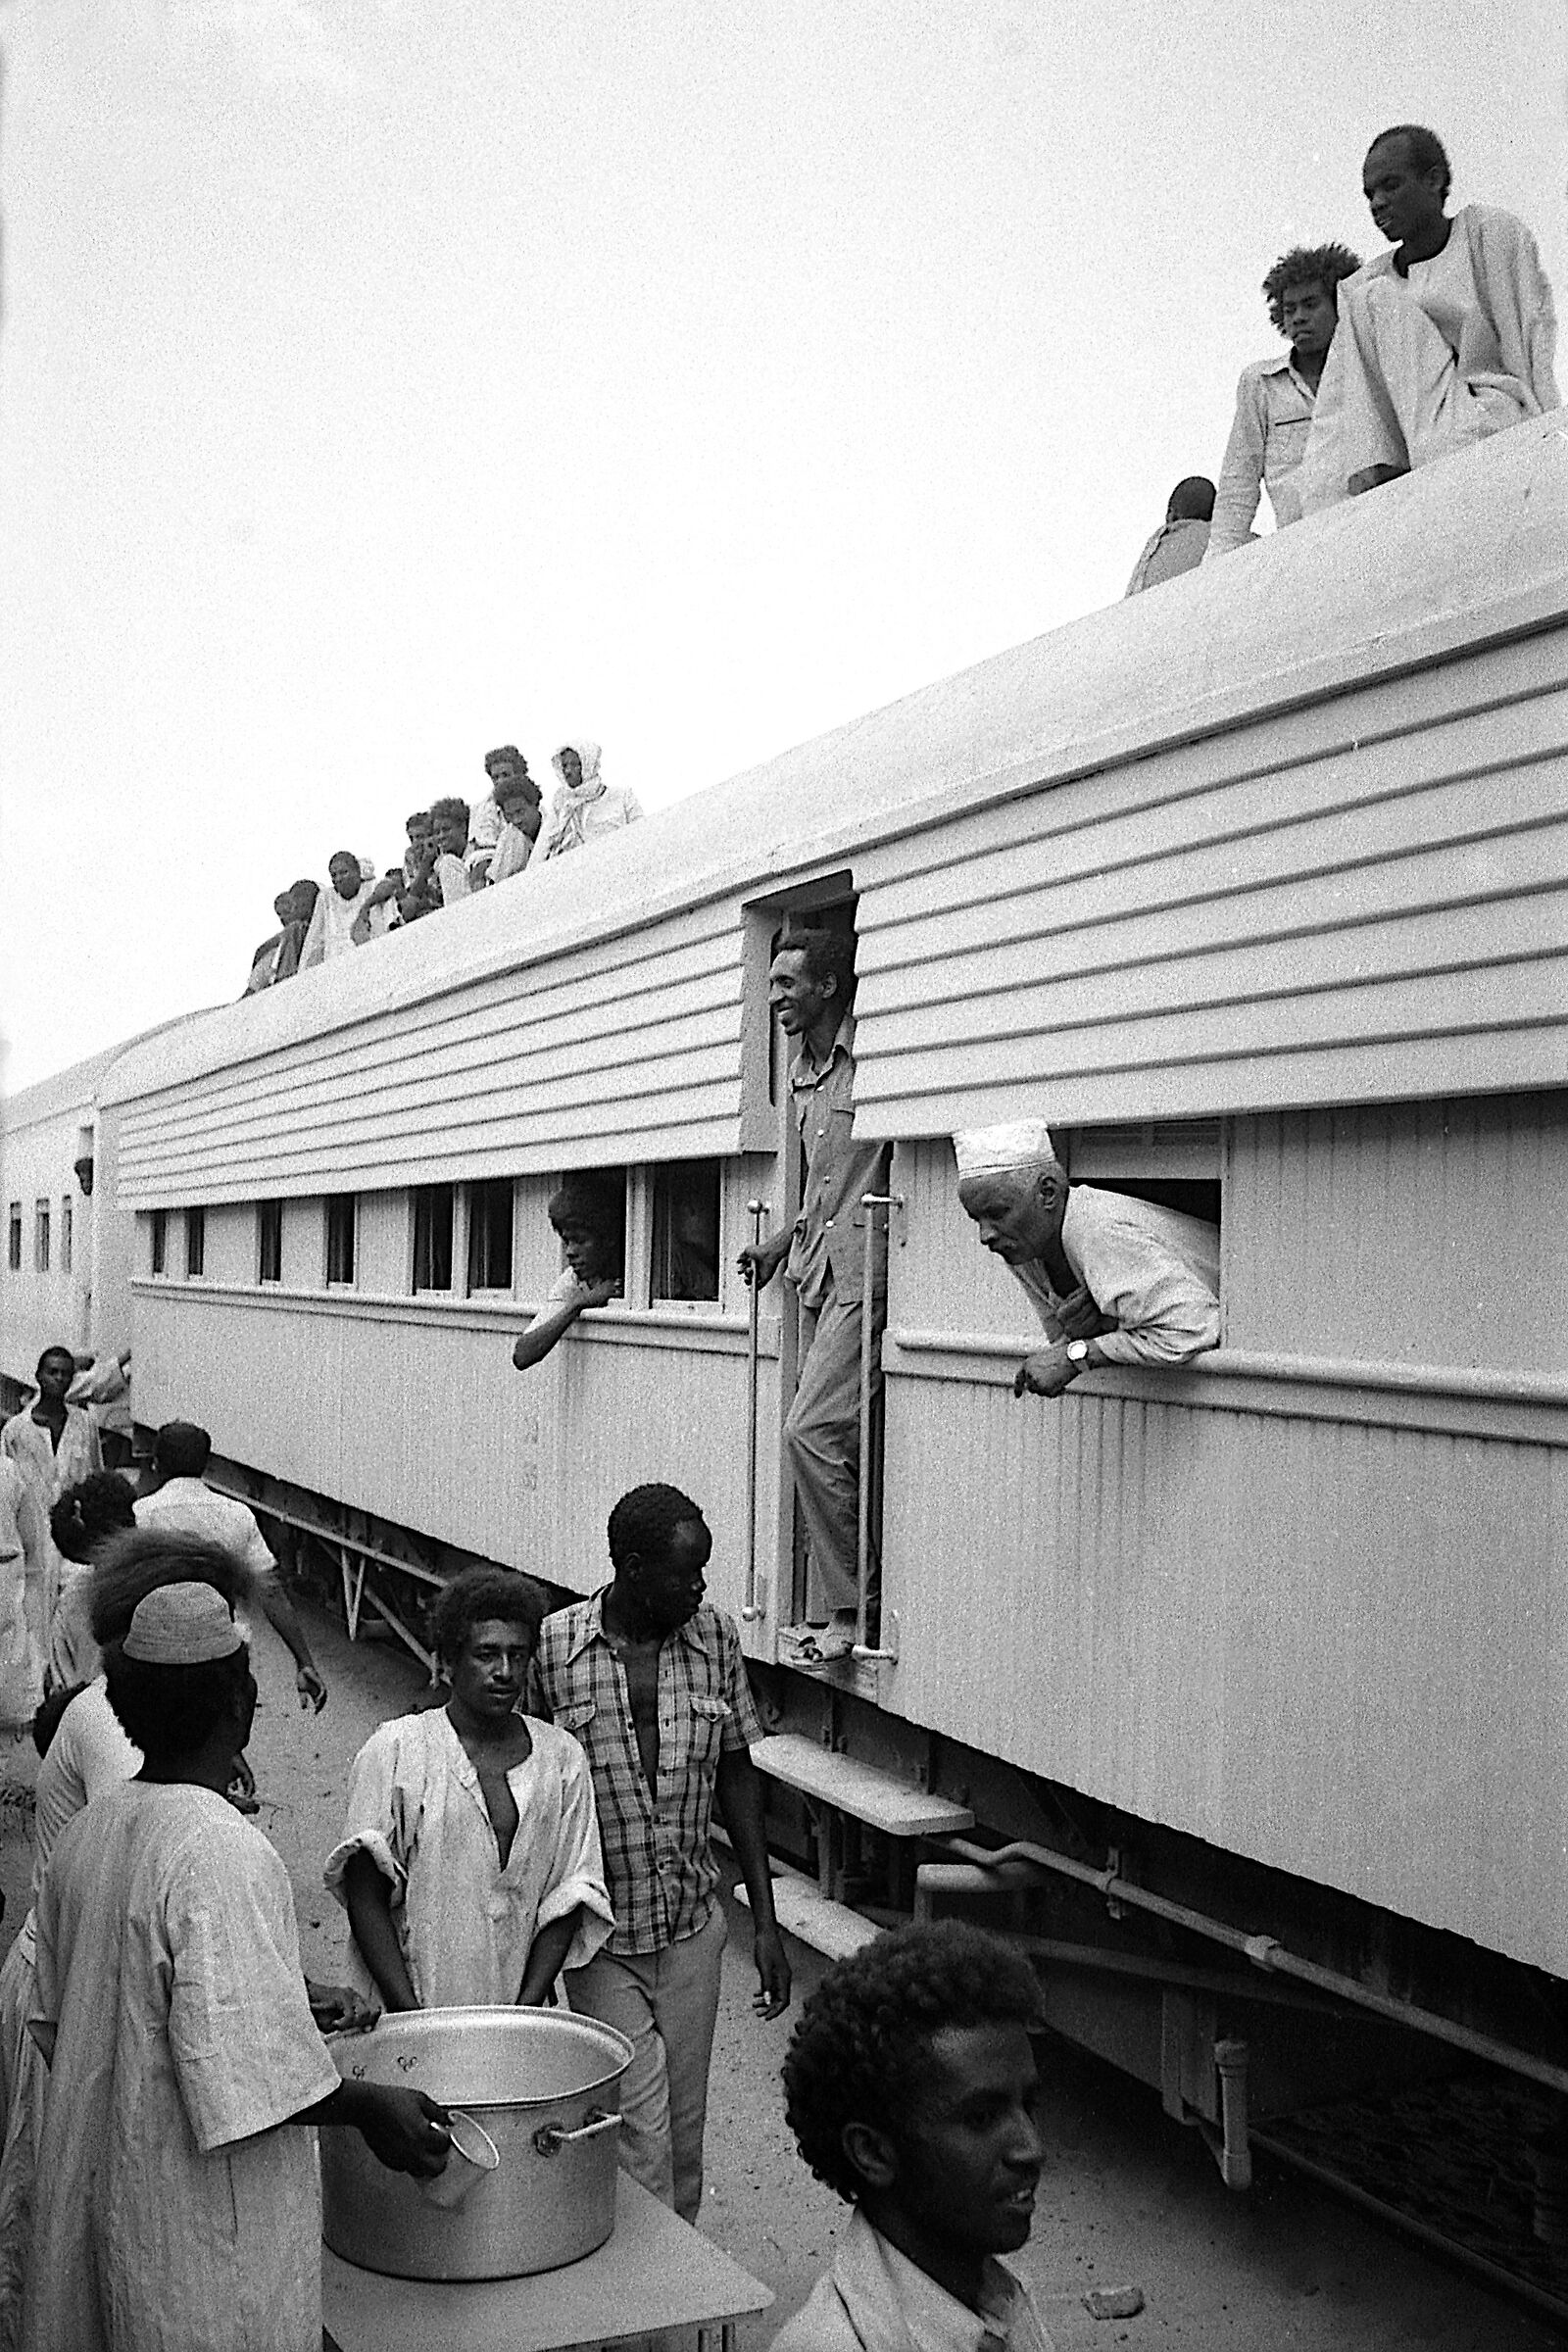 1984 Sudan "traveling south ...